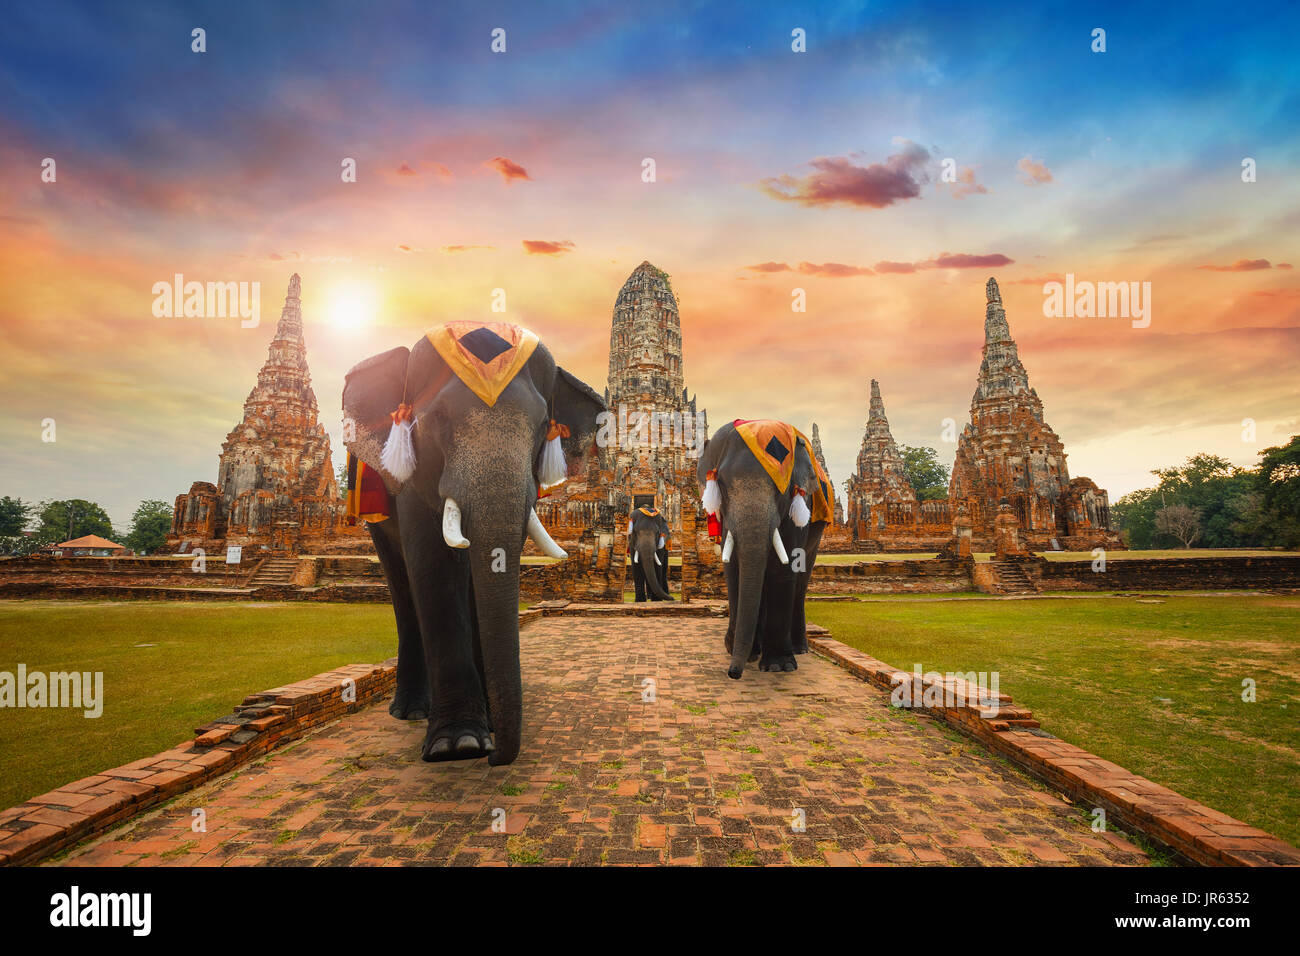 Elephant at Wat Chaiwatthanaram temple in Ayuthaya Historical Park, a UNESCO world heritage site, Thailand Stock Photo